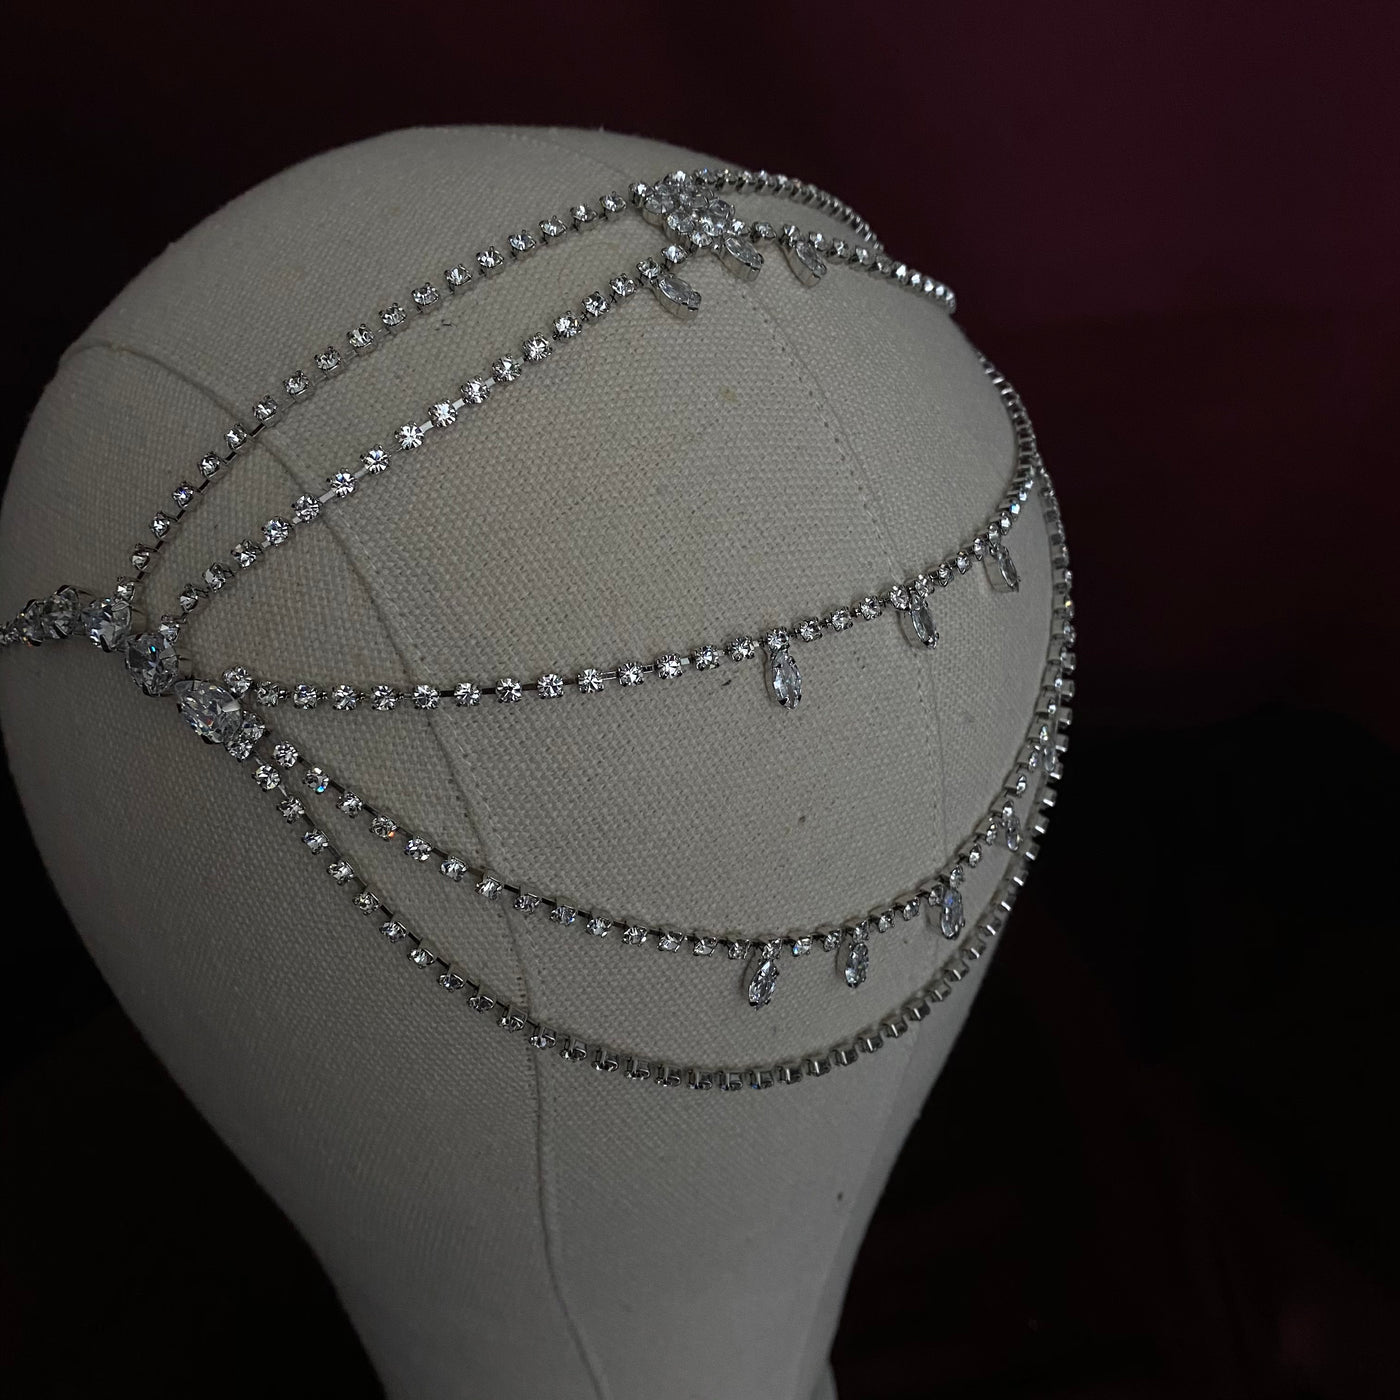 DAWN Bridal Forehead Jewelry with Swarovski Crystals